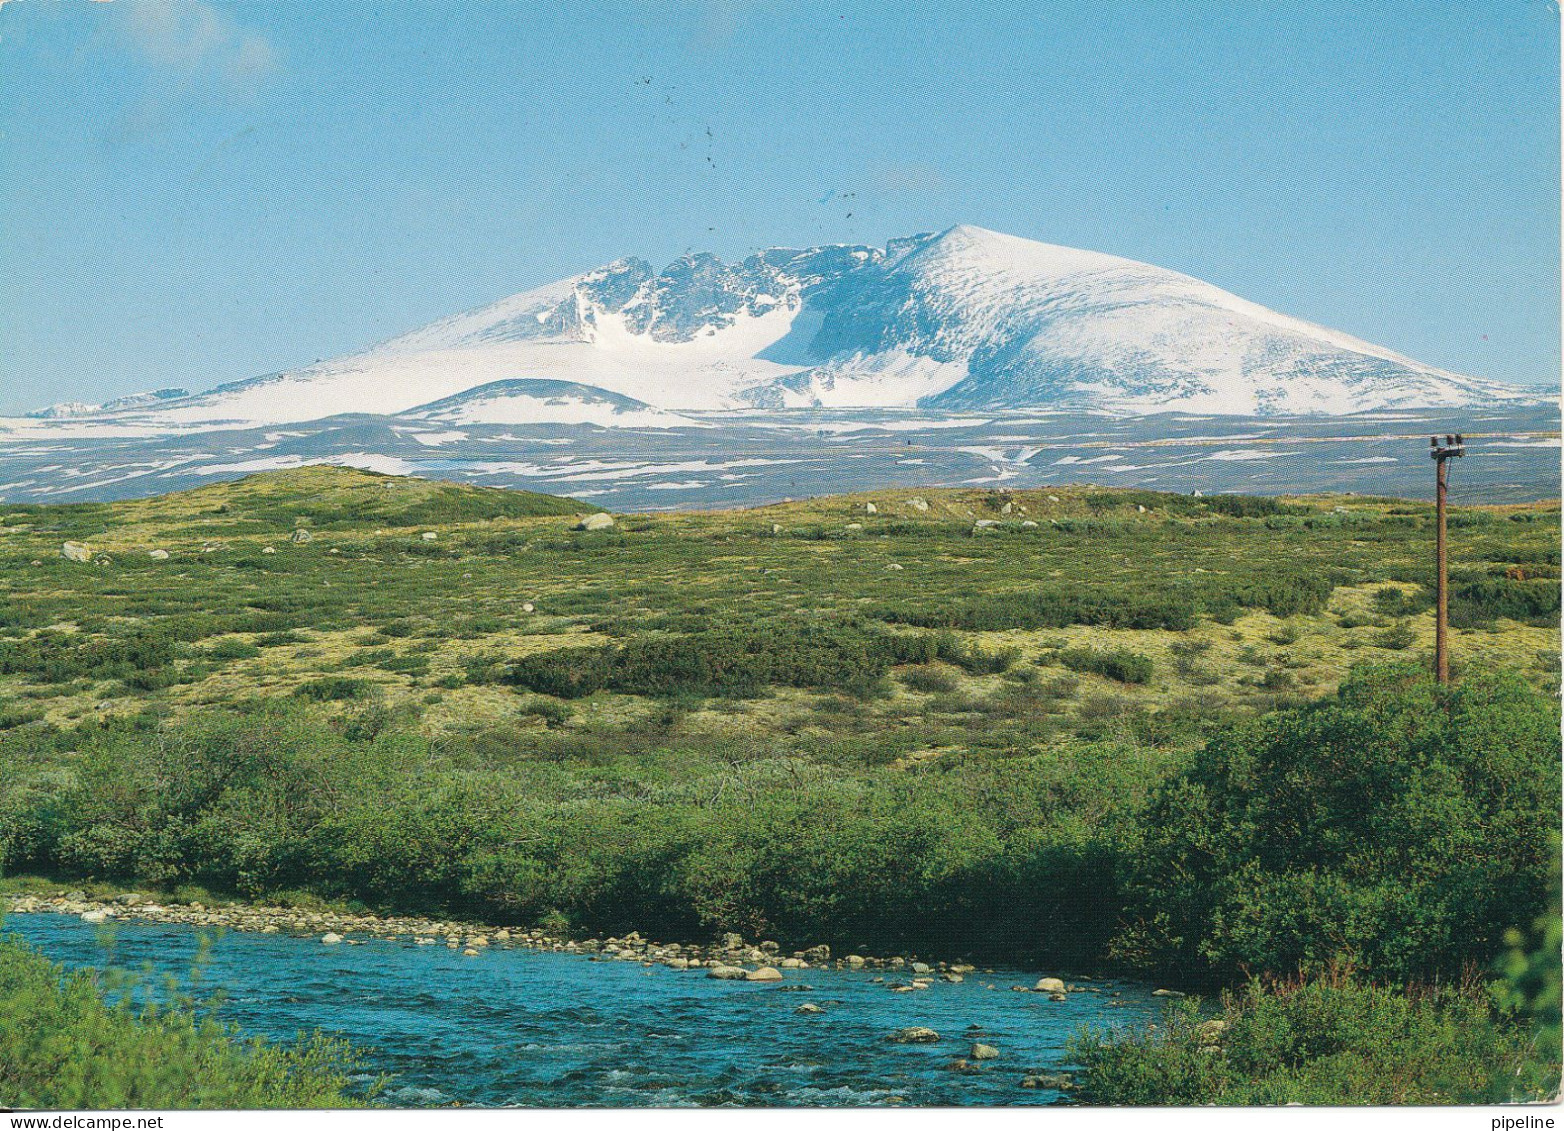 Norway Postcard Sent To Denmark Folldal 27-7-1983 View From Dovrefjell Mountain Plateau - Norway